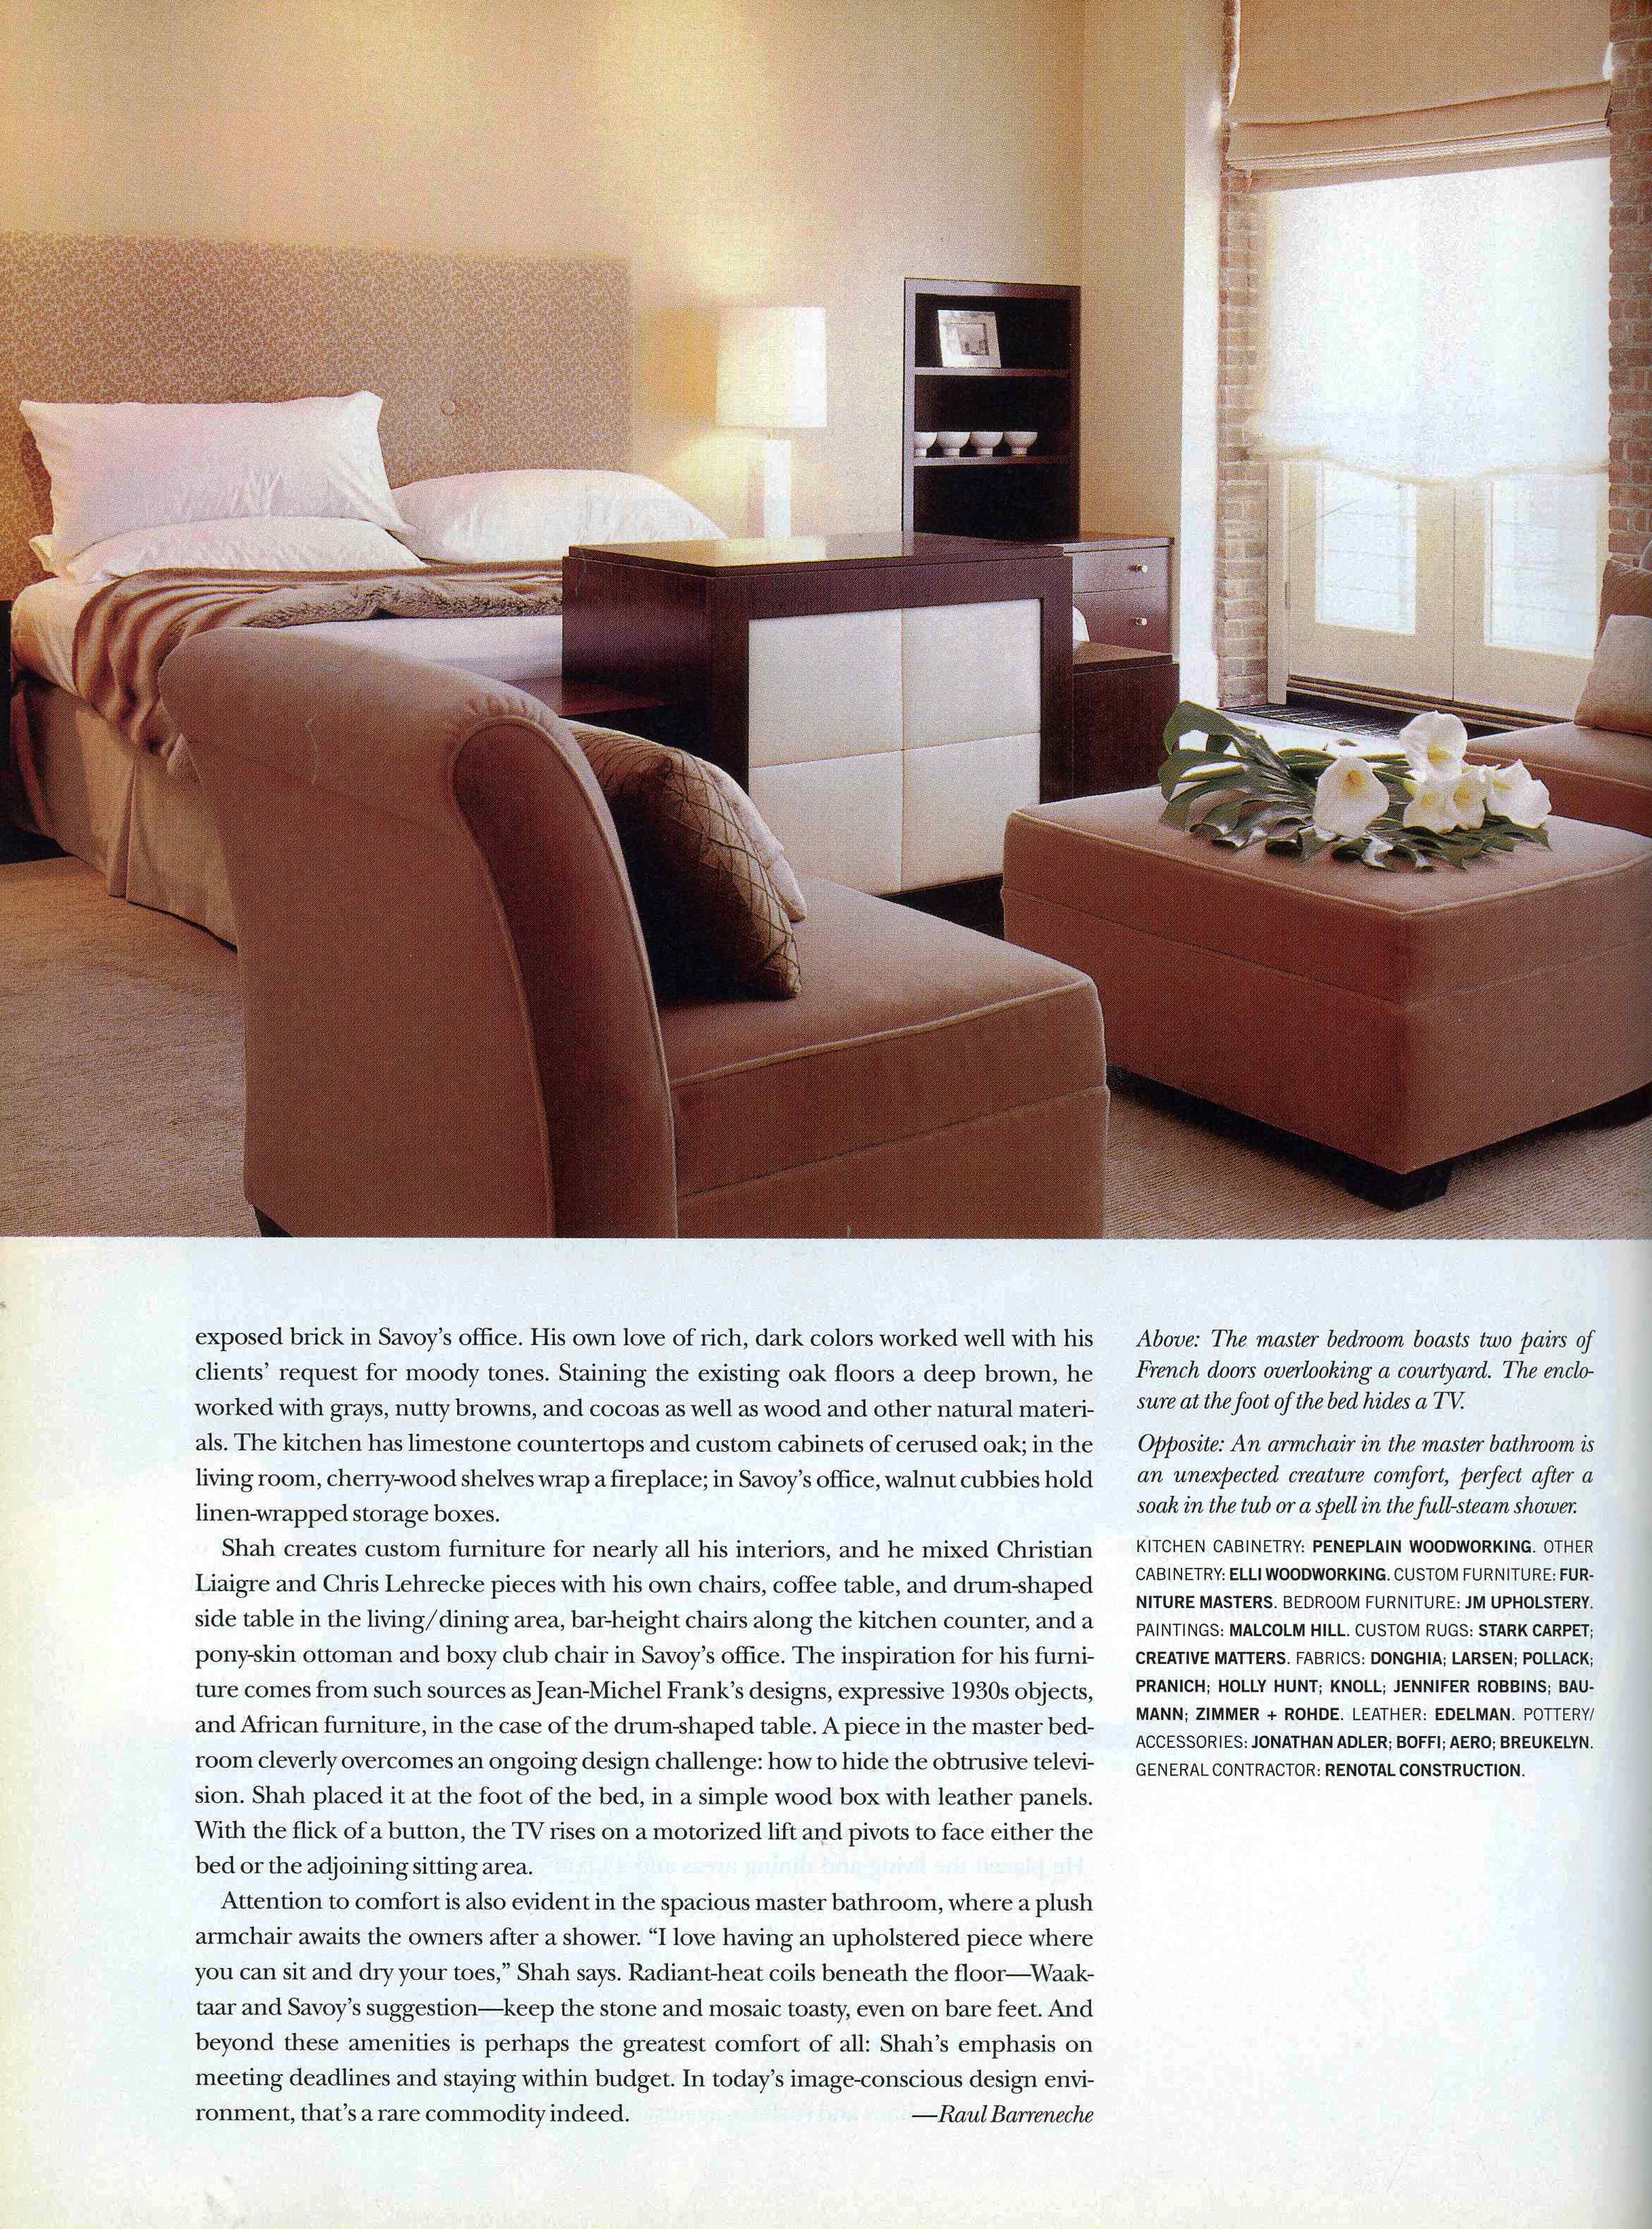 Interior Design_Nov 01_Savoy_Full Article_Page_8.jpg